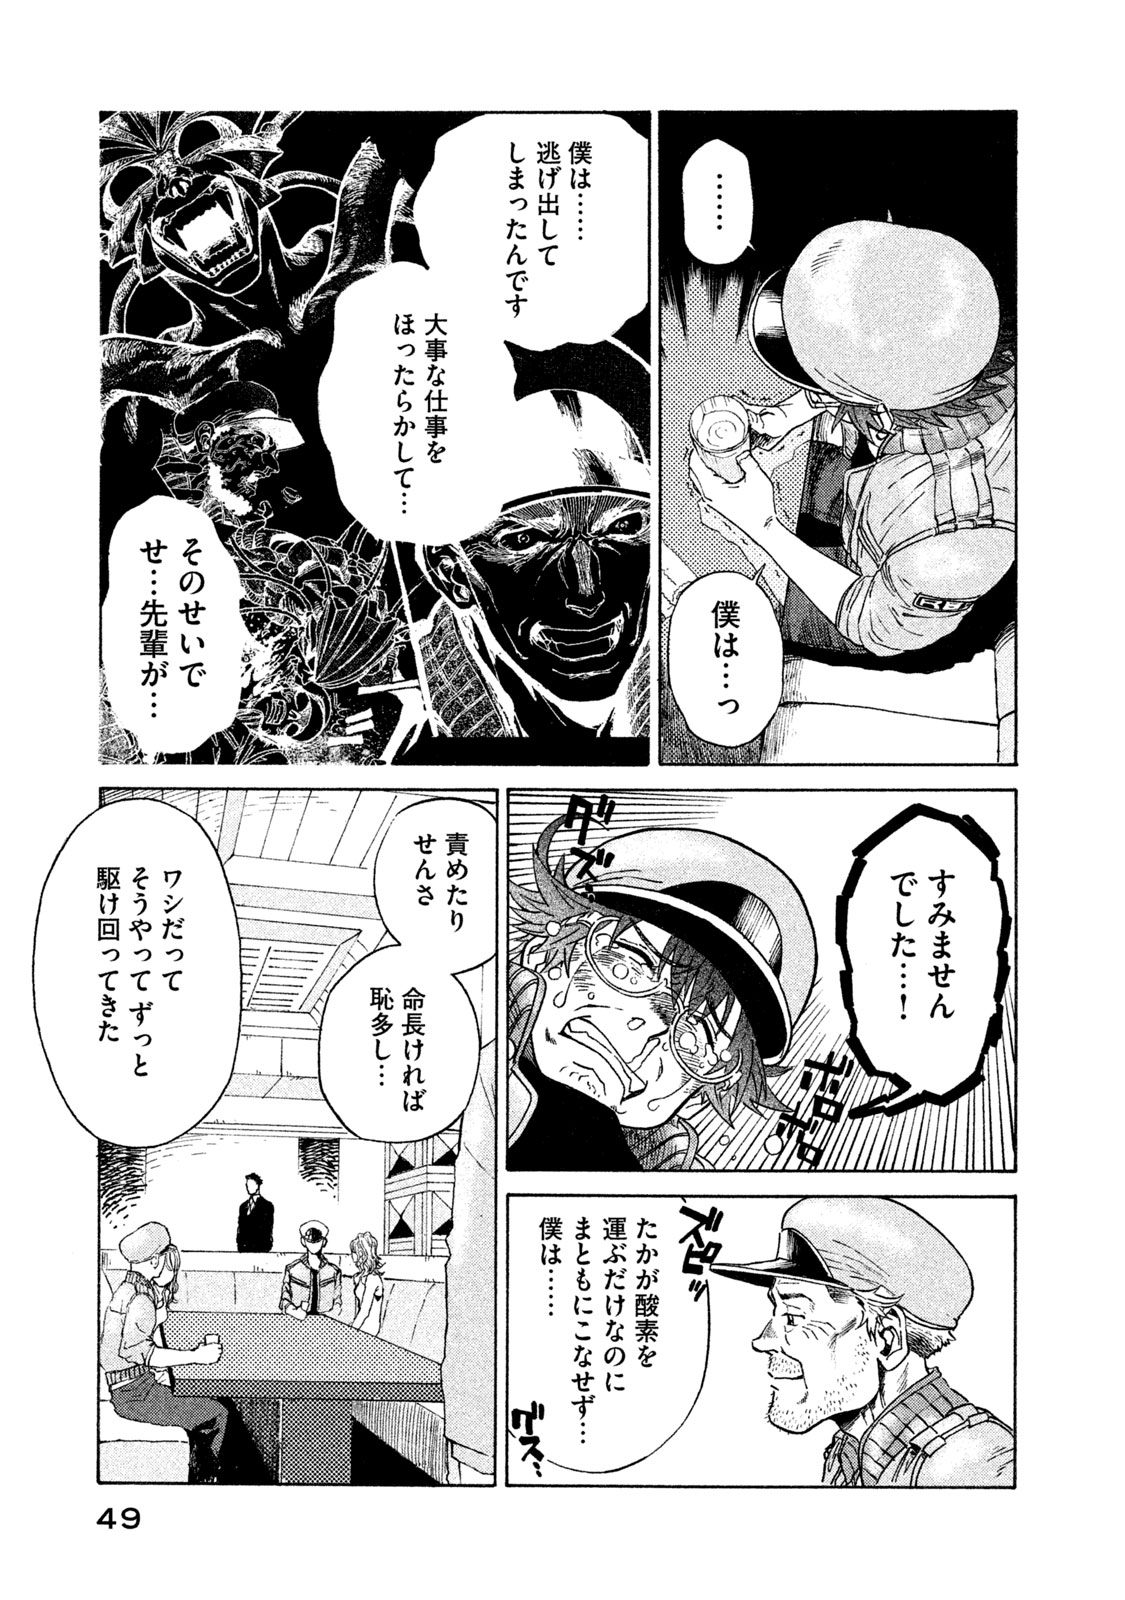 Hataraku Saibou BLACK - Chapter 2 - Page 13